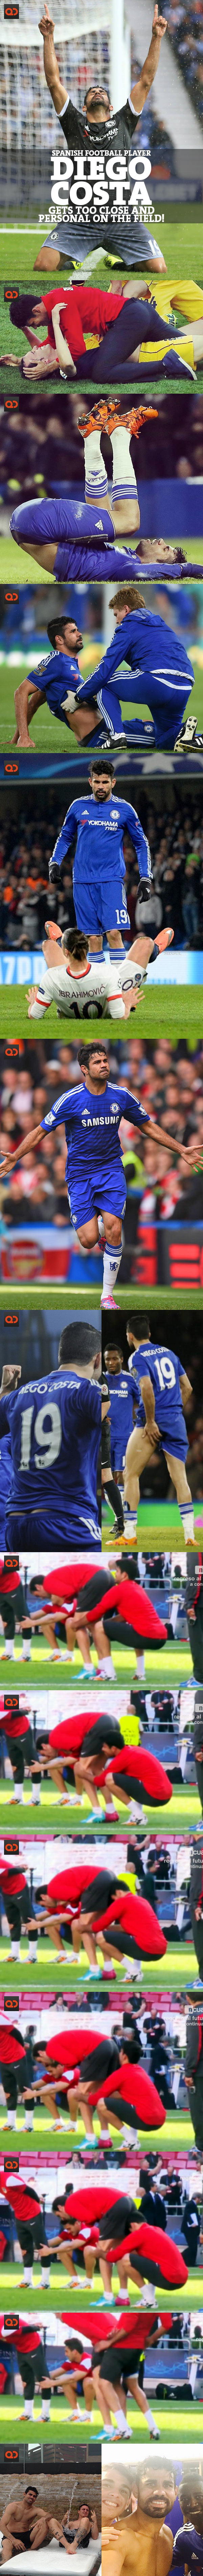 qc-spanish_footballer_diego_costa_bitting_opponent-collage01